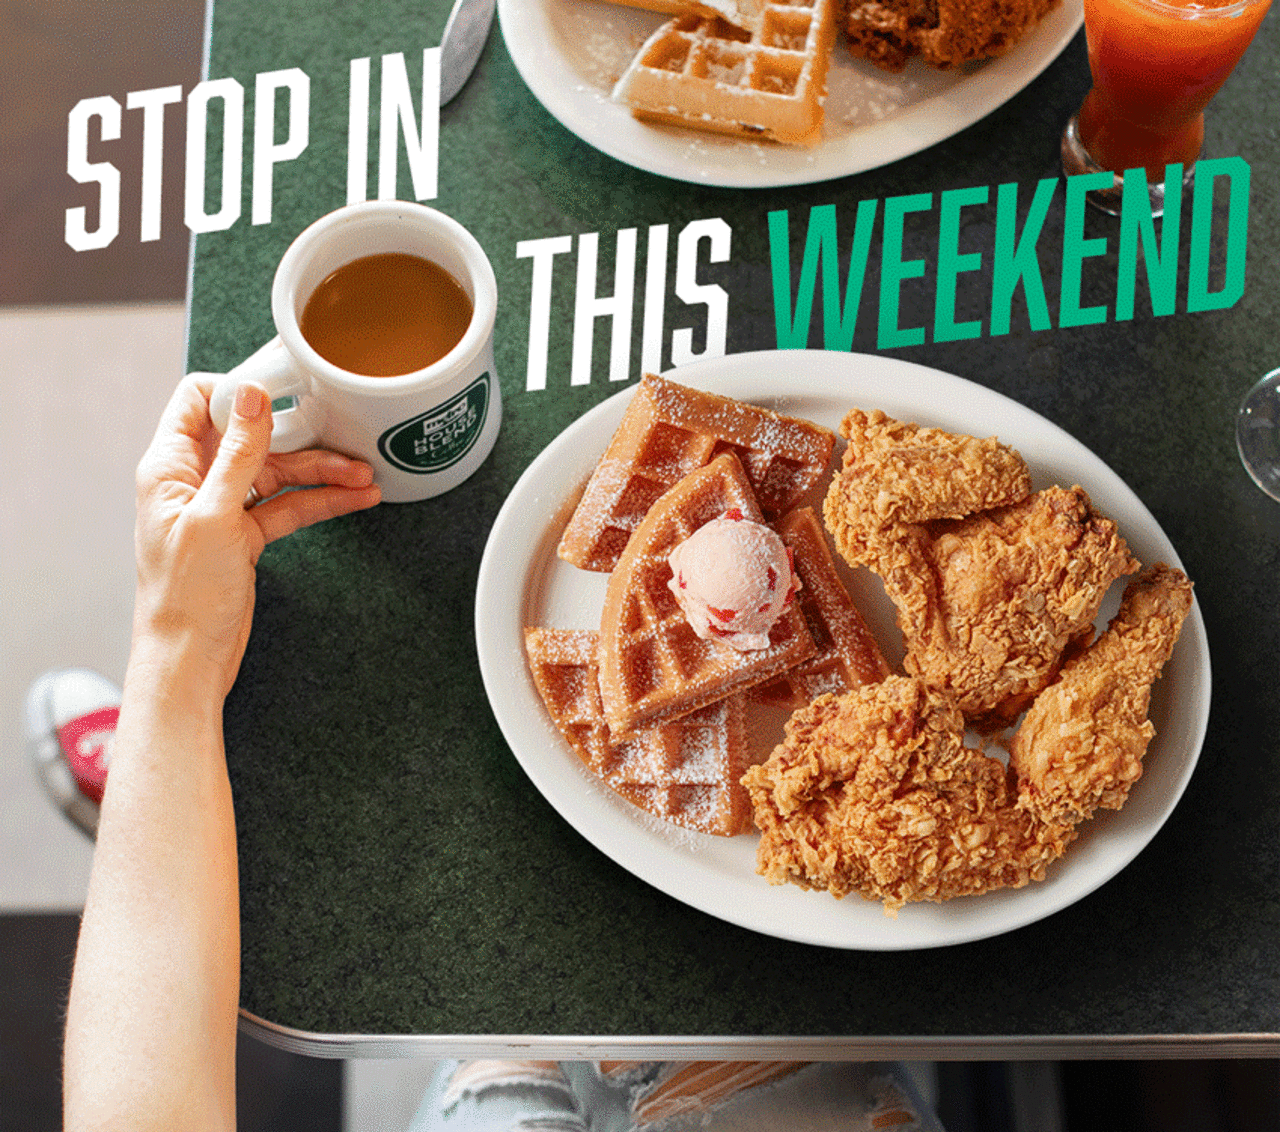 Stop in this weekend!